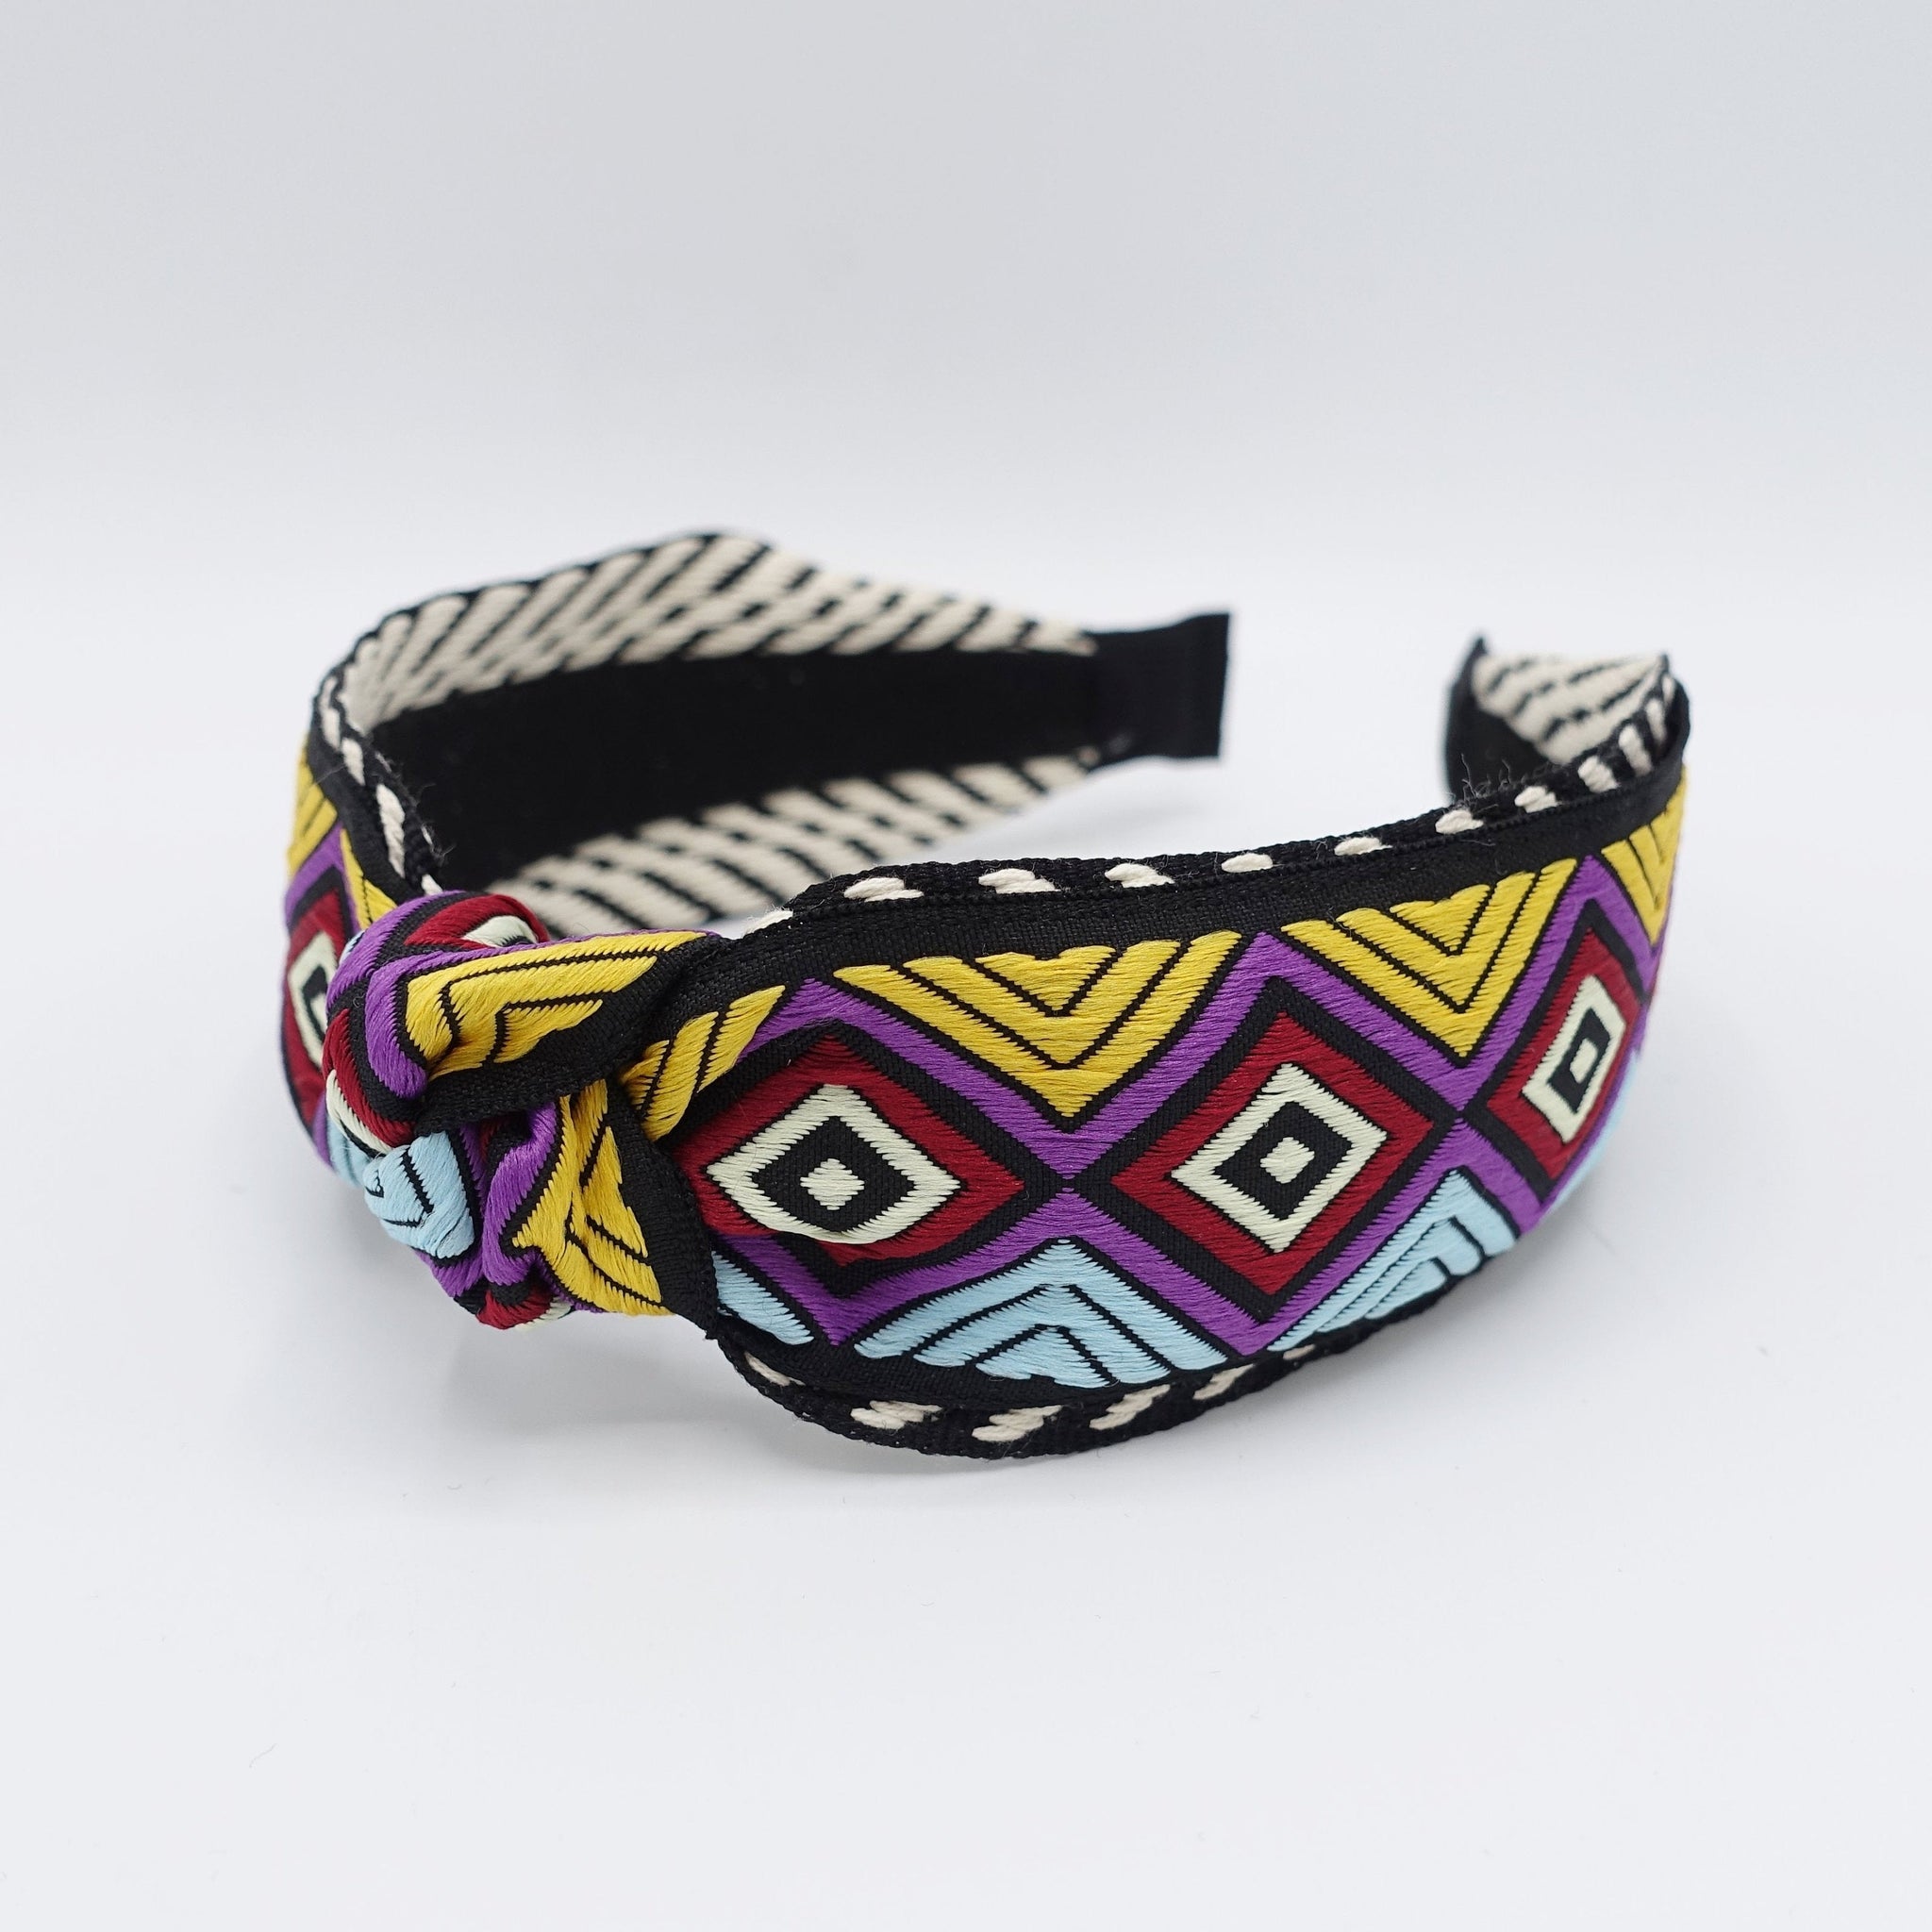 VeryShine Headband Sky diamond embroidery headband top knot diagonal pattern hairband for women